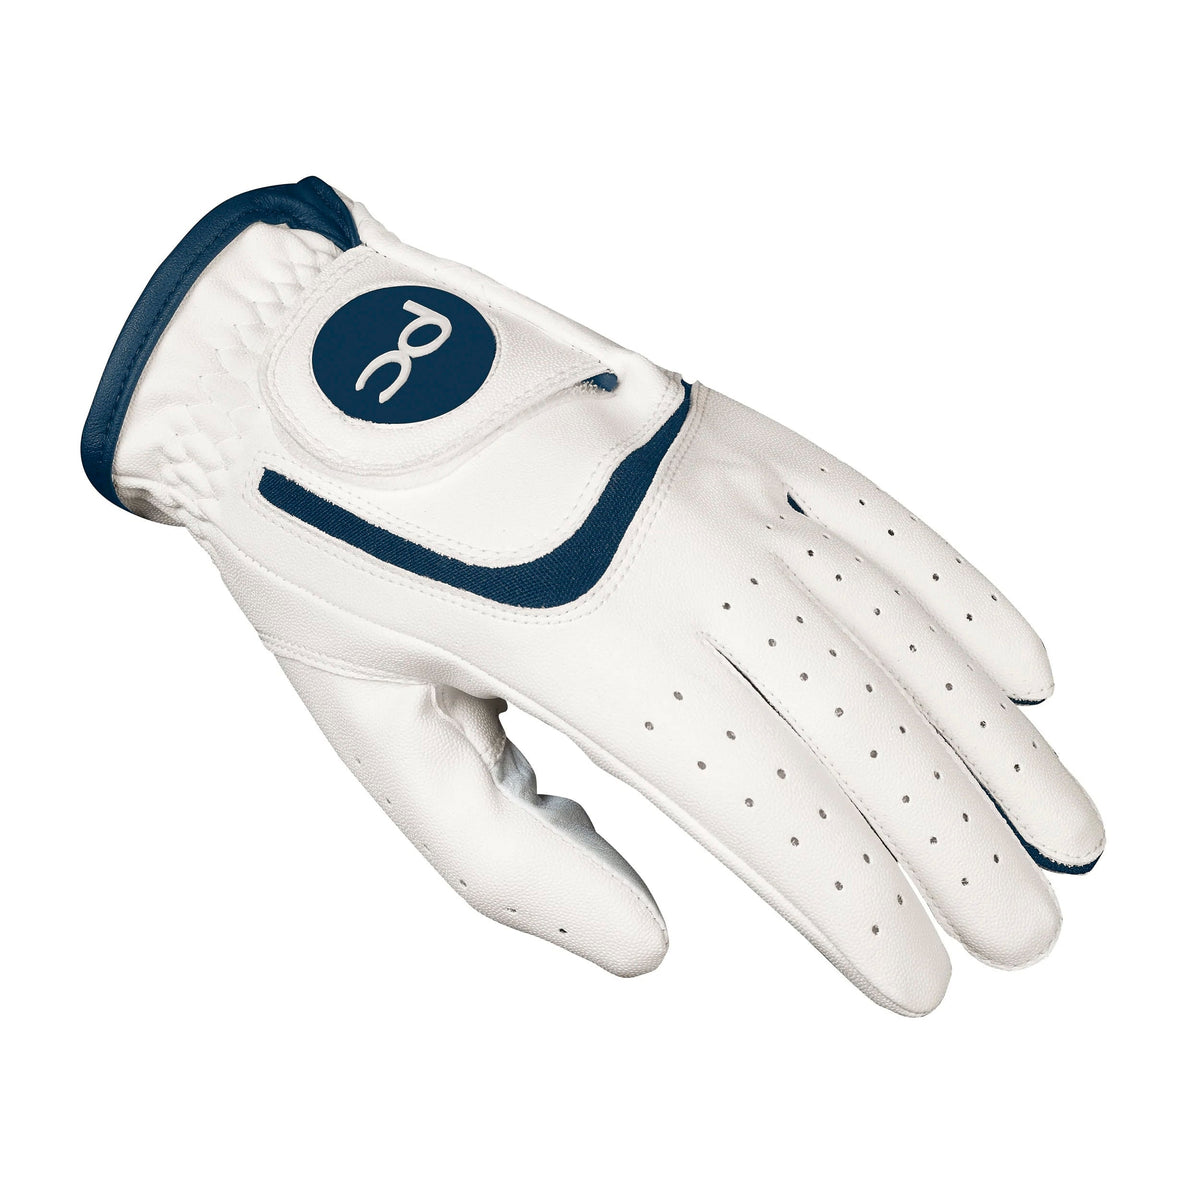 JUNIOR ALL WEATHER GLOVE - LEFT HAND (Right Handed Golfer) - WHITE/NAVY